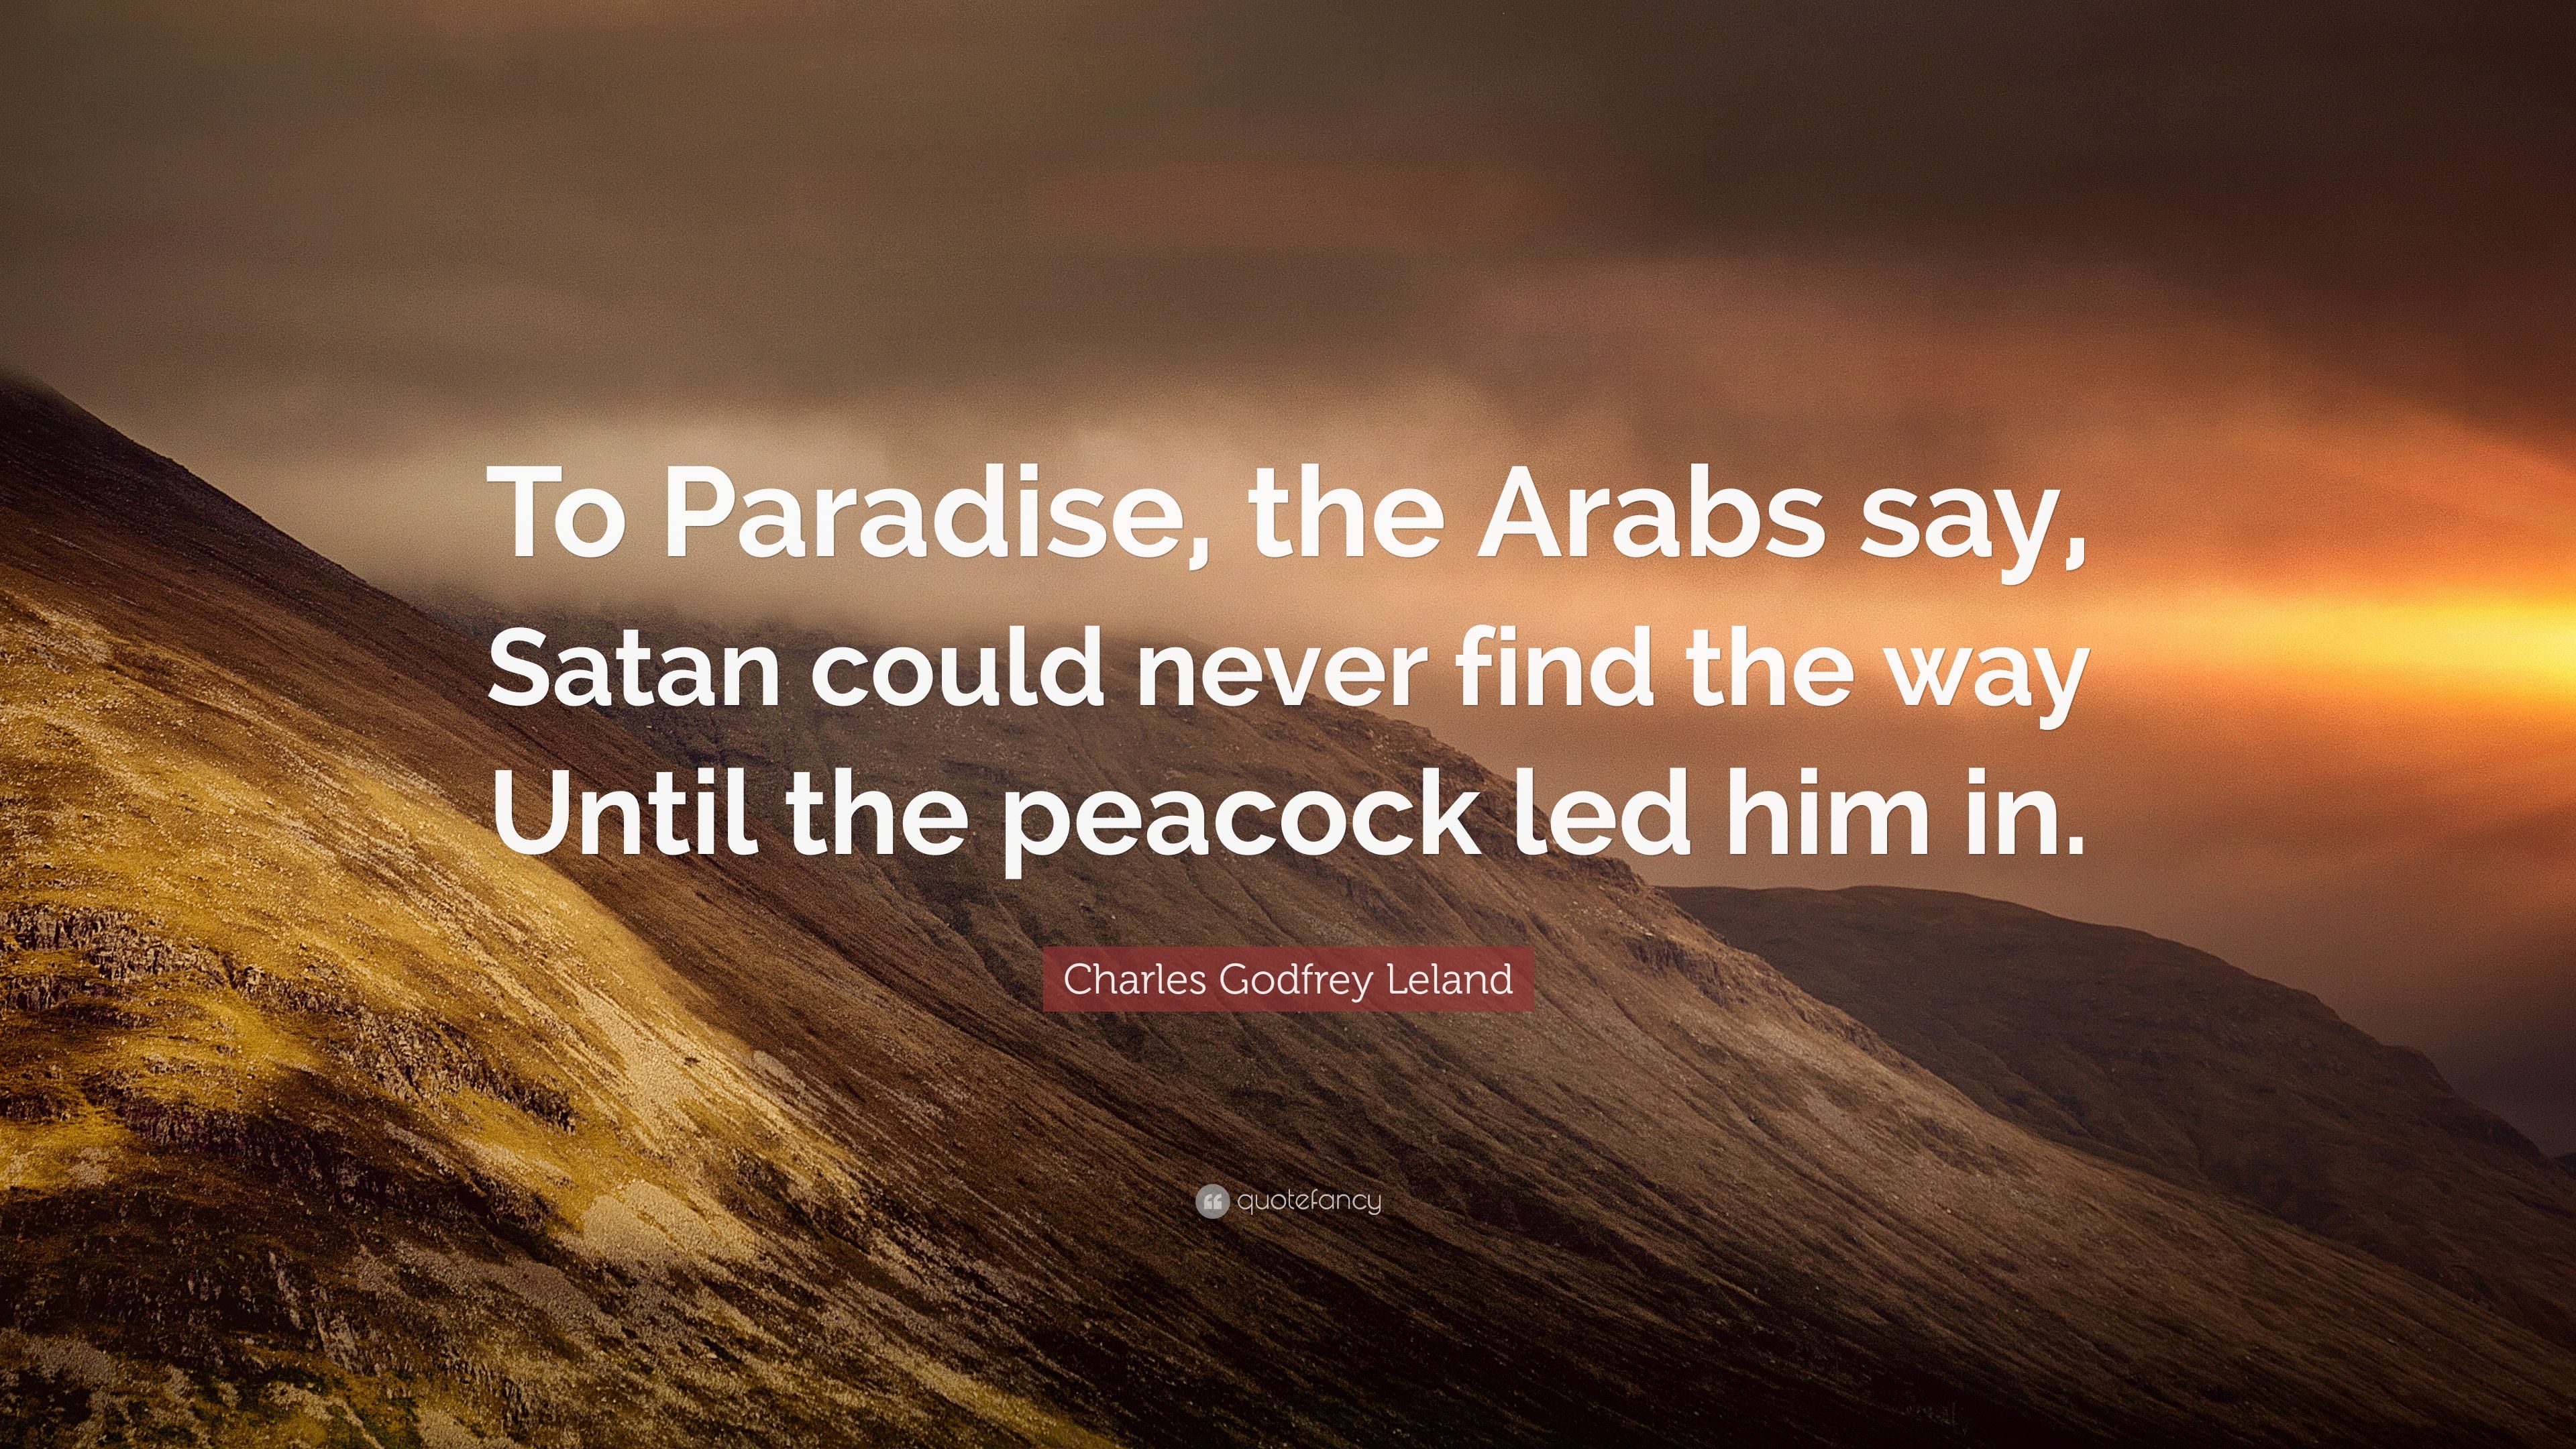 Charles Godfrey Leland Quote: “To Paradise, the Arabs say